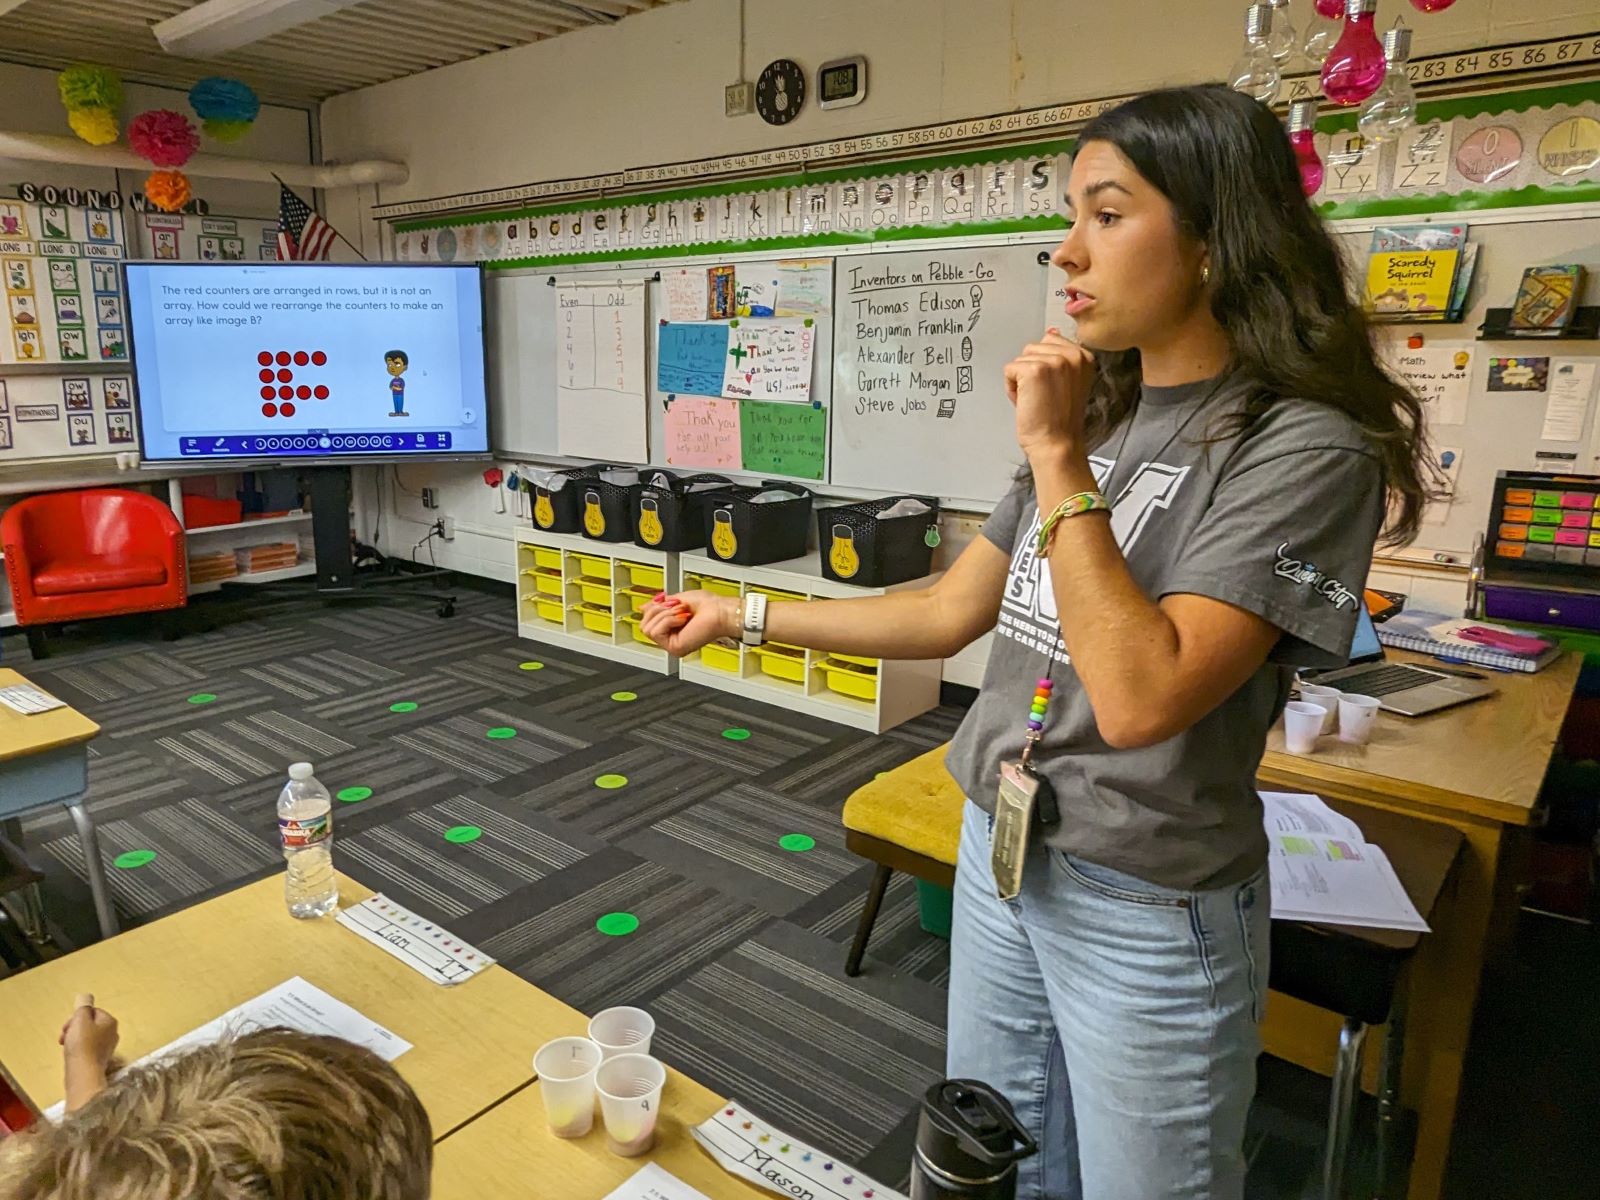 SPS teacher training plan includes student behavior, peer-to-peer instruction